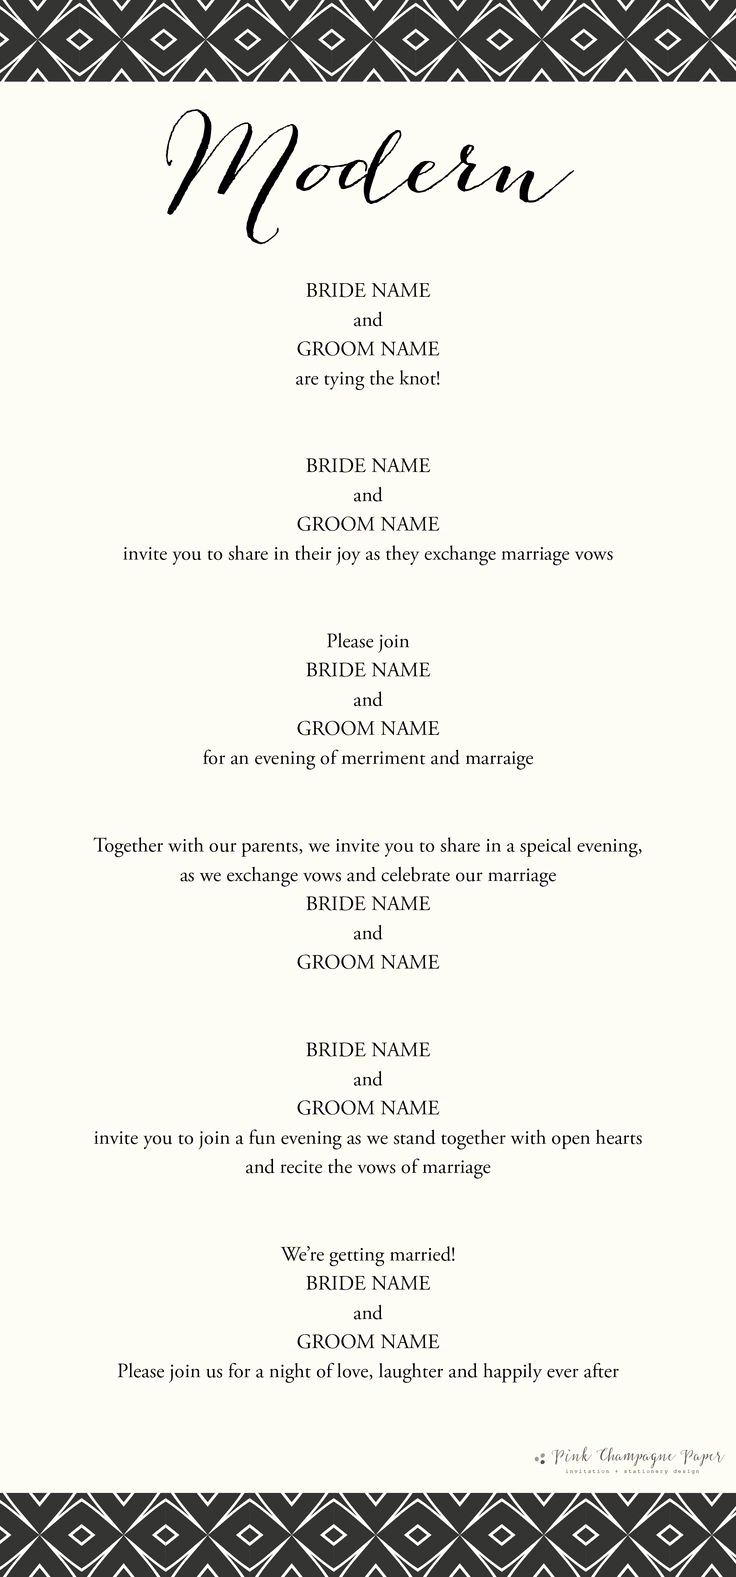 Modern Wedding Invitation Wording Inspirational 1000 Ideas About Modern Wedding Invitation Wording On